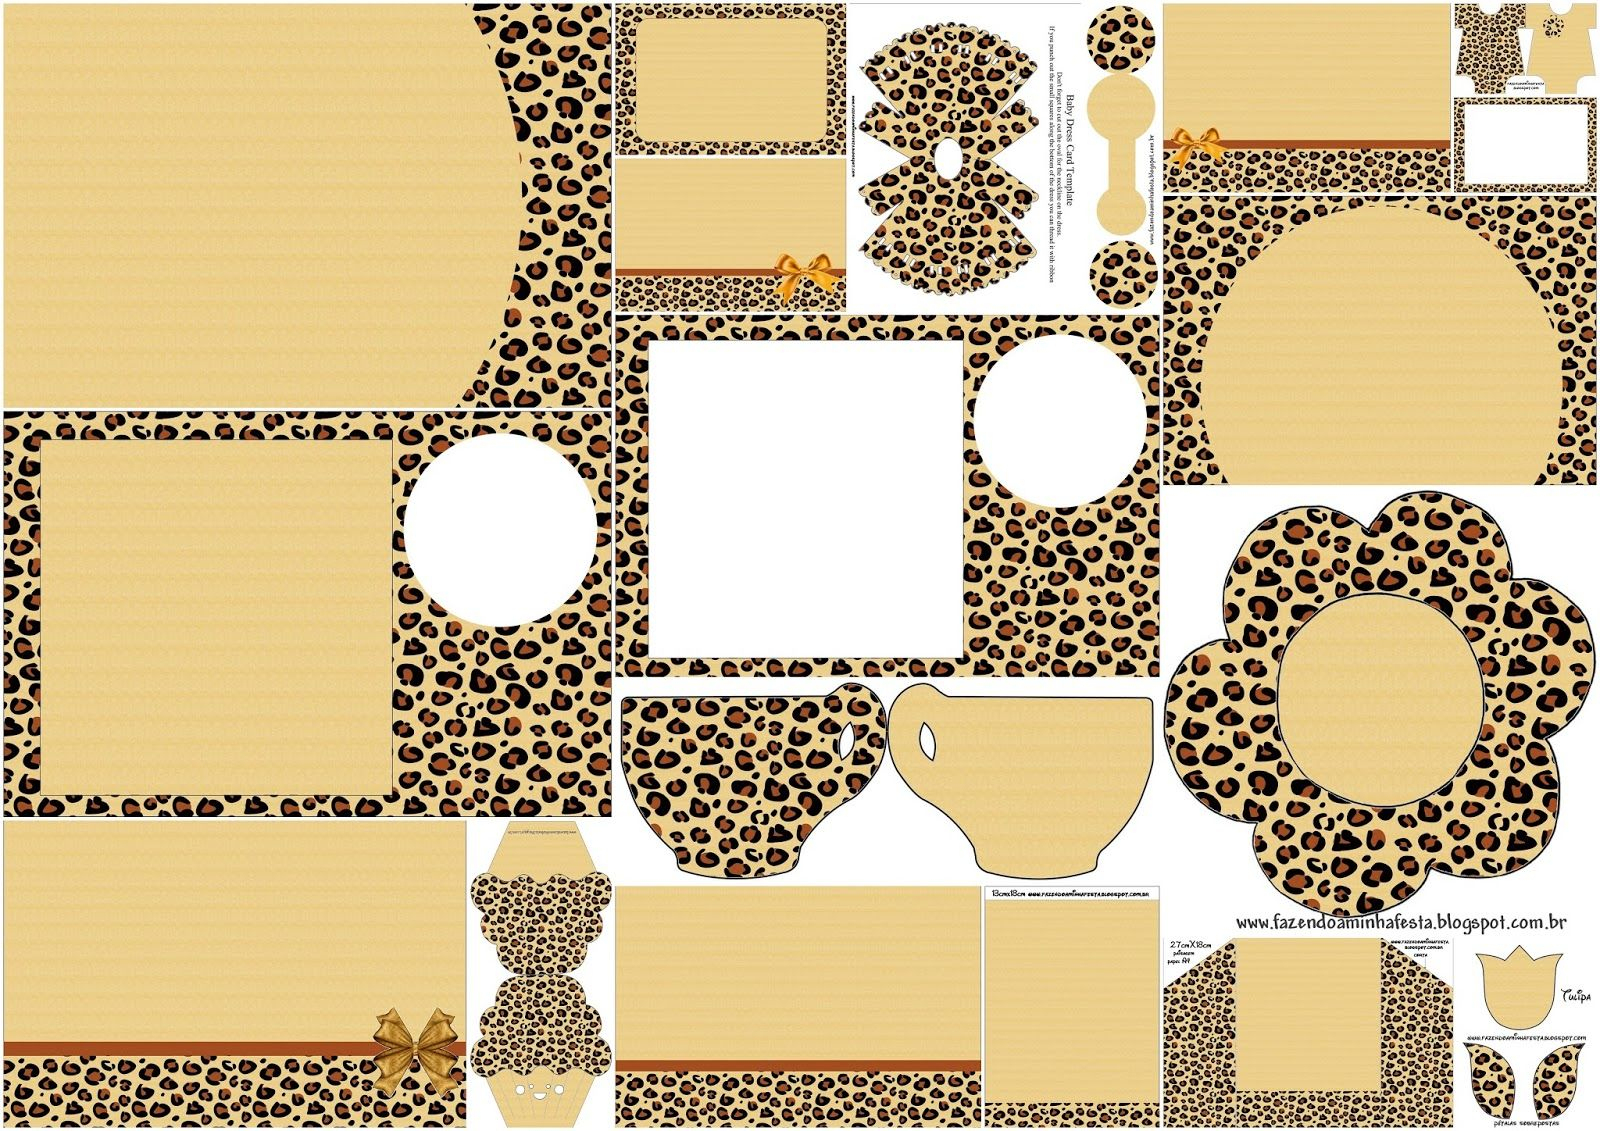 Leopard Prints: Free Printable Invitation. | Party | Pinterest - Free Printable Cheetah Birthday Invitations